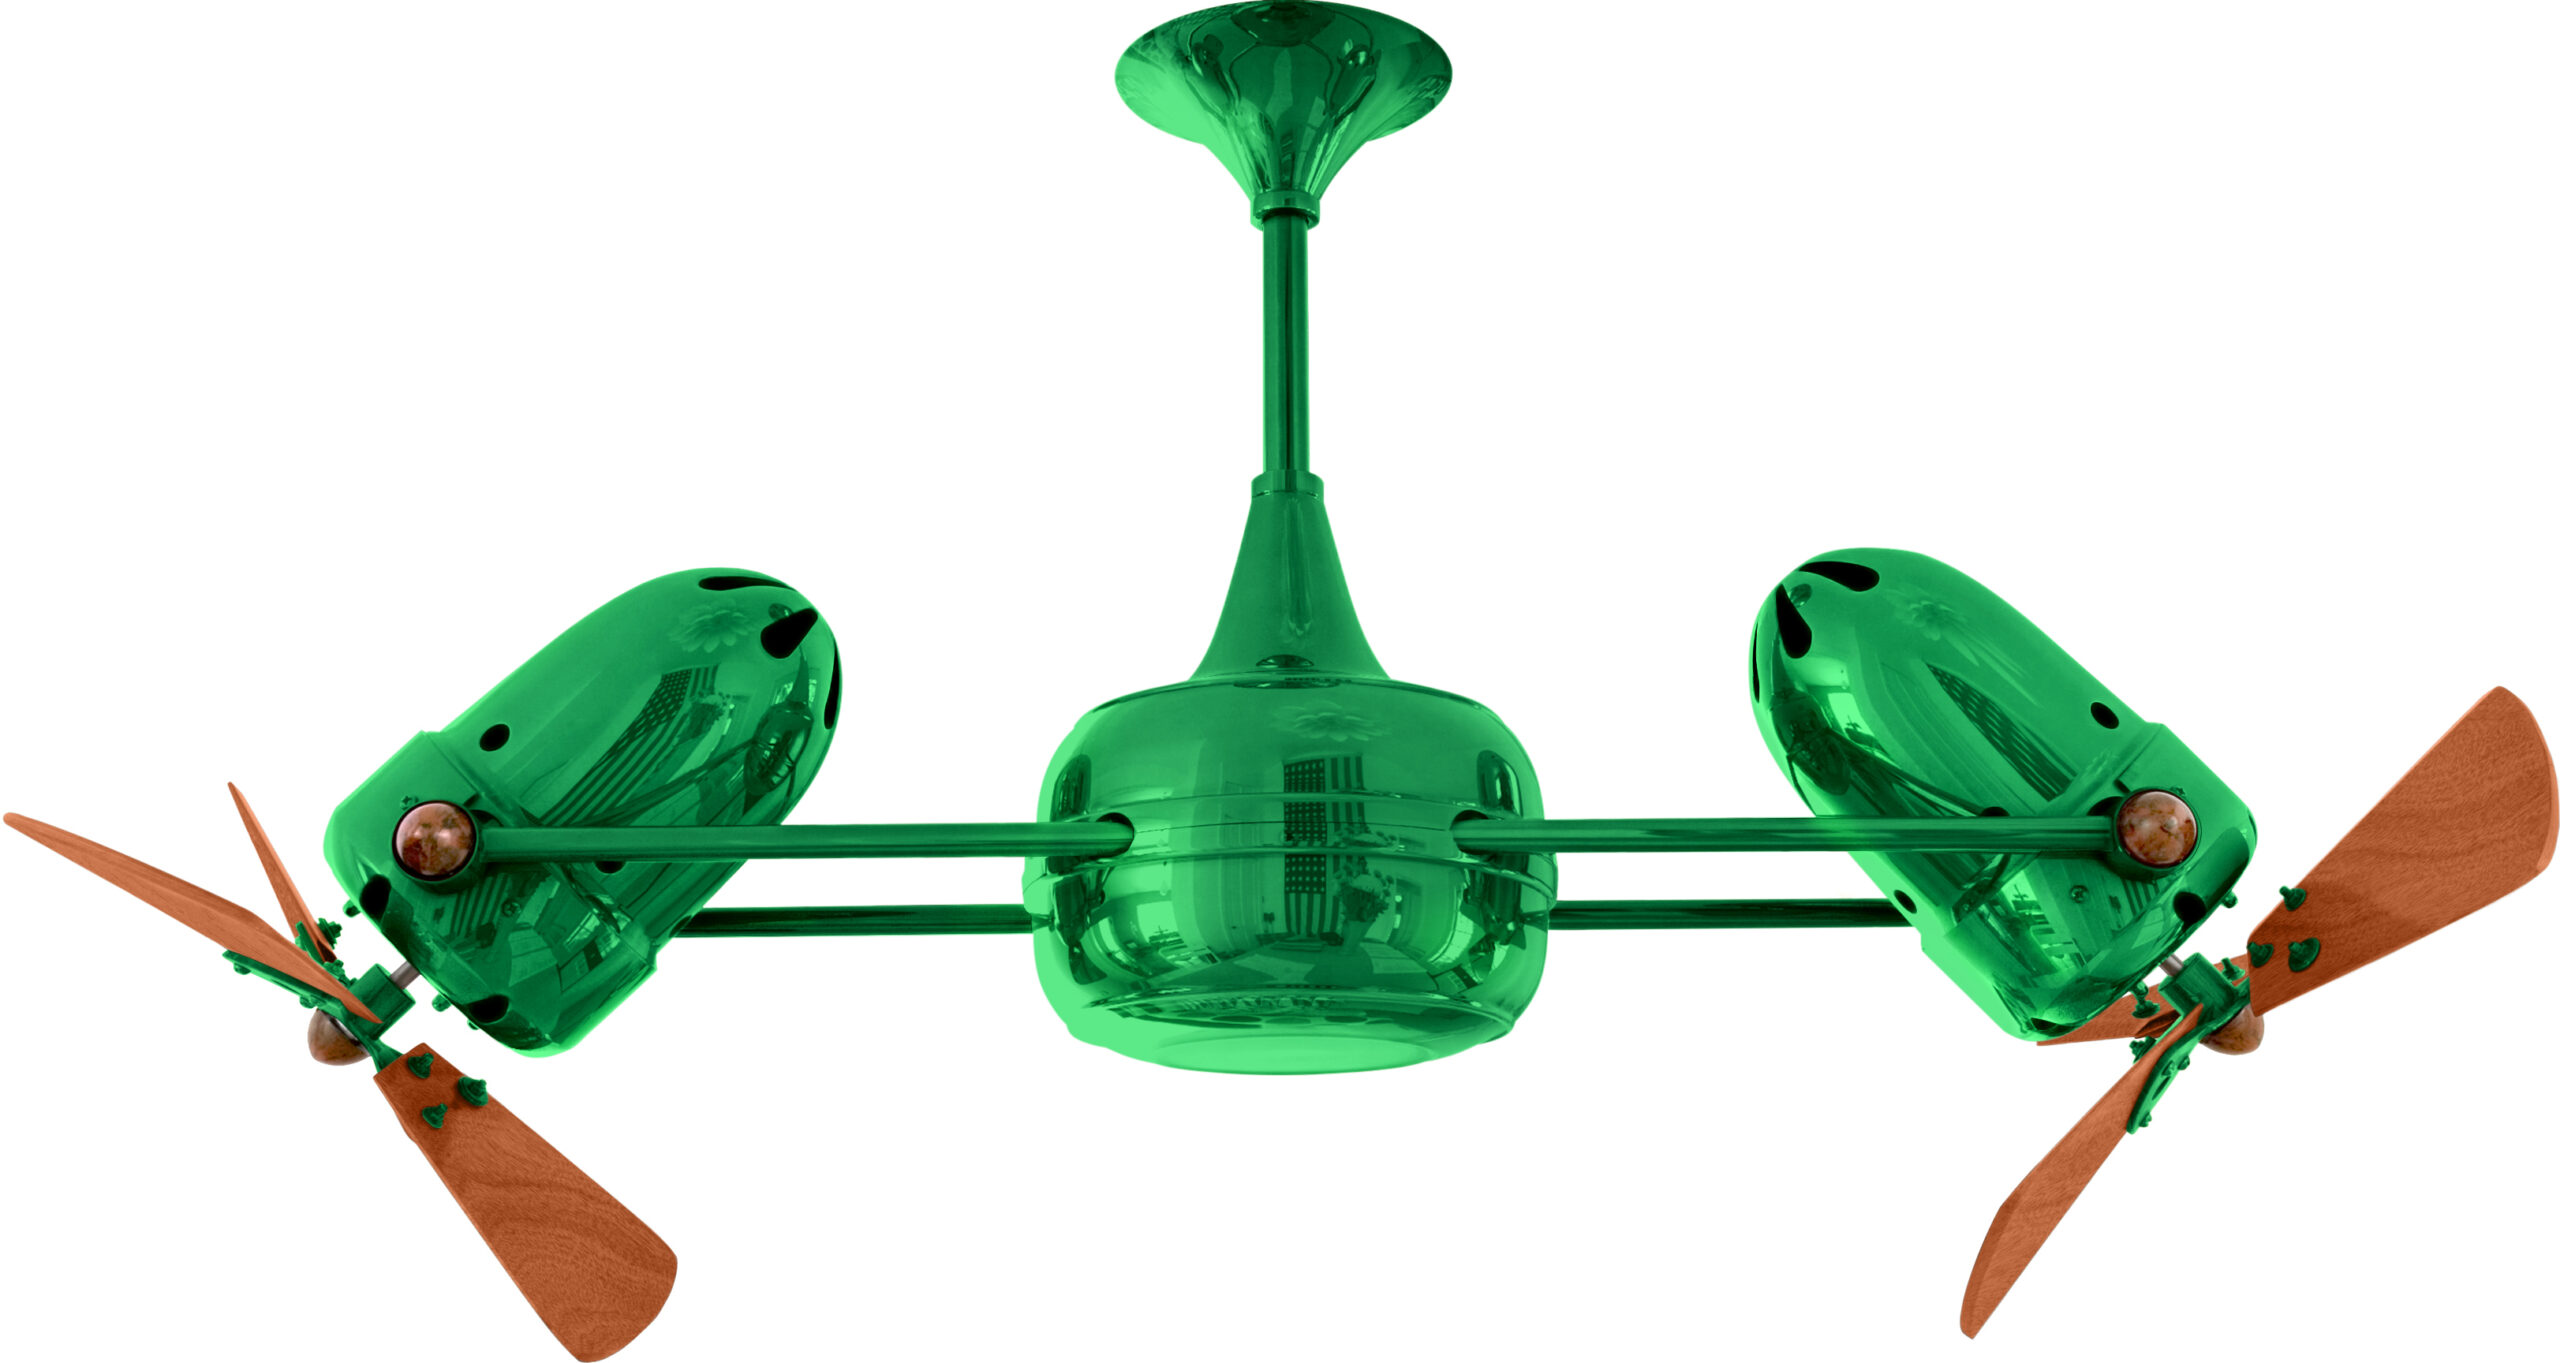 Duplo Dinamico rotational dual head ceiling fan in green / esmeralda finish with solid mahogany wood blades made by Matthews Fan Company.